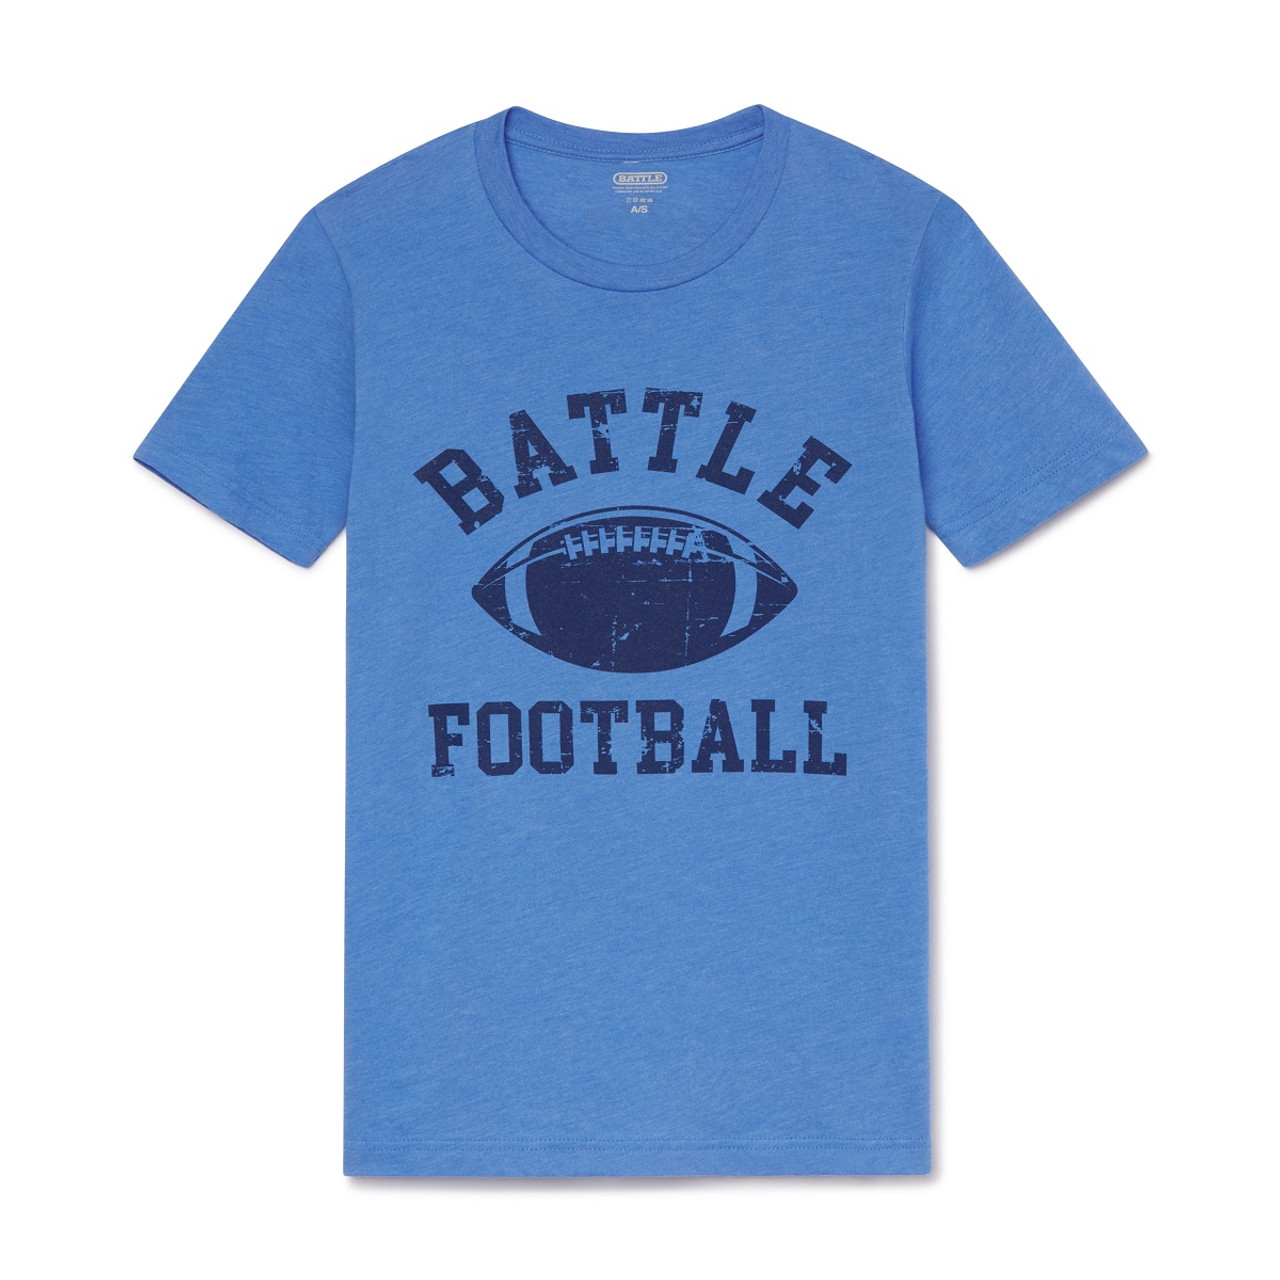 Football T-Shirts  School Football Team T-shirts